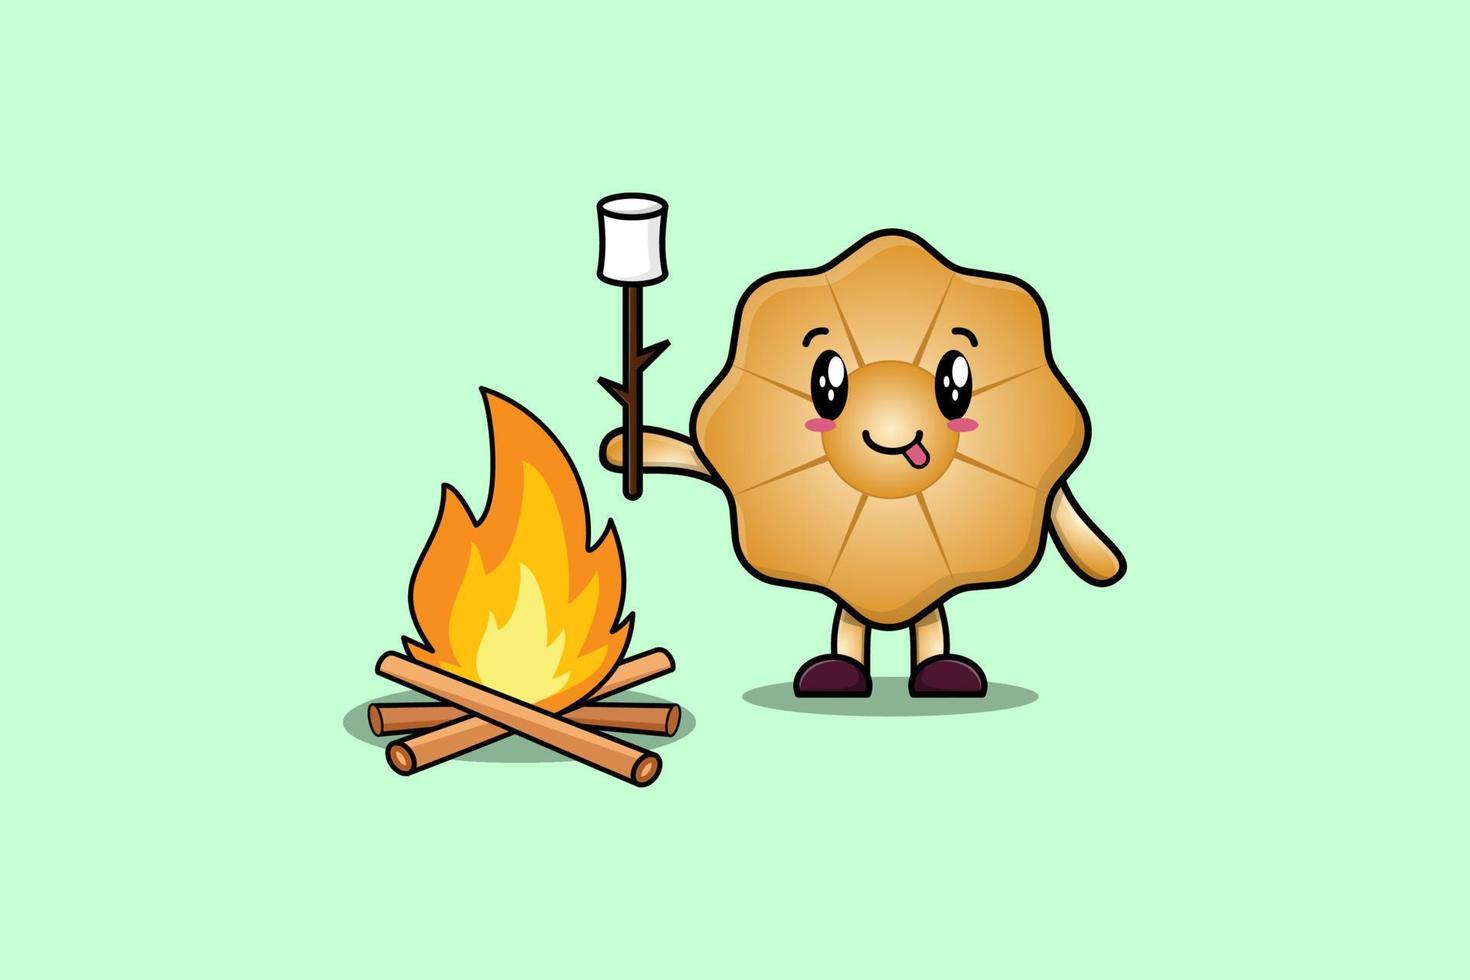 Cute cartoon Cookies character burning marshmallow vector